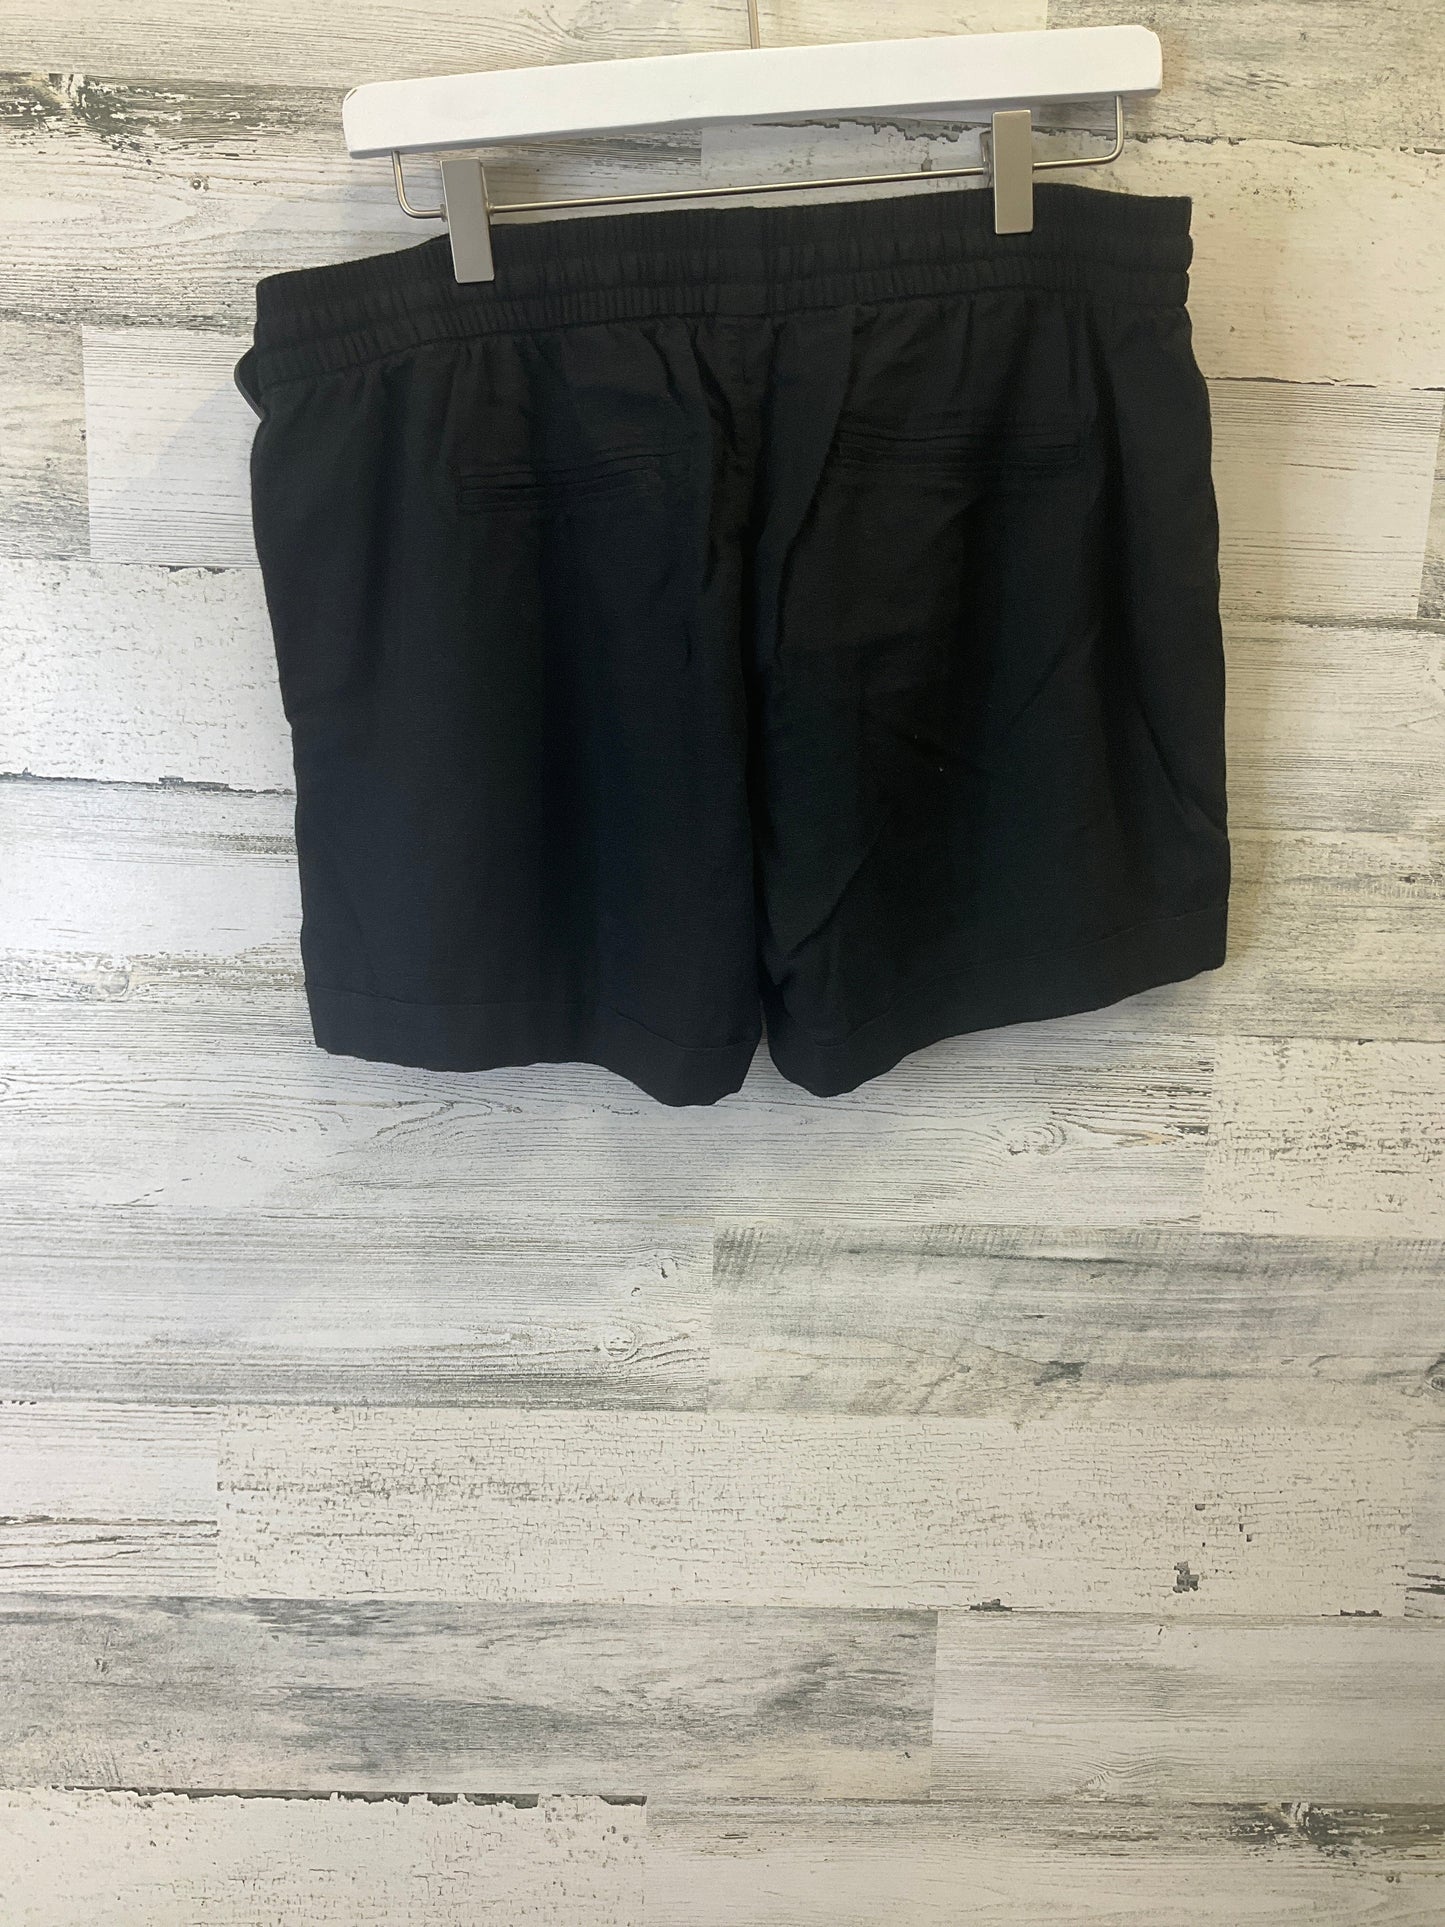 Black Shorts Old Navy, Size 12